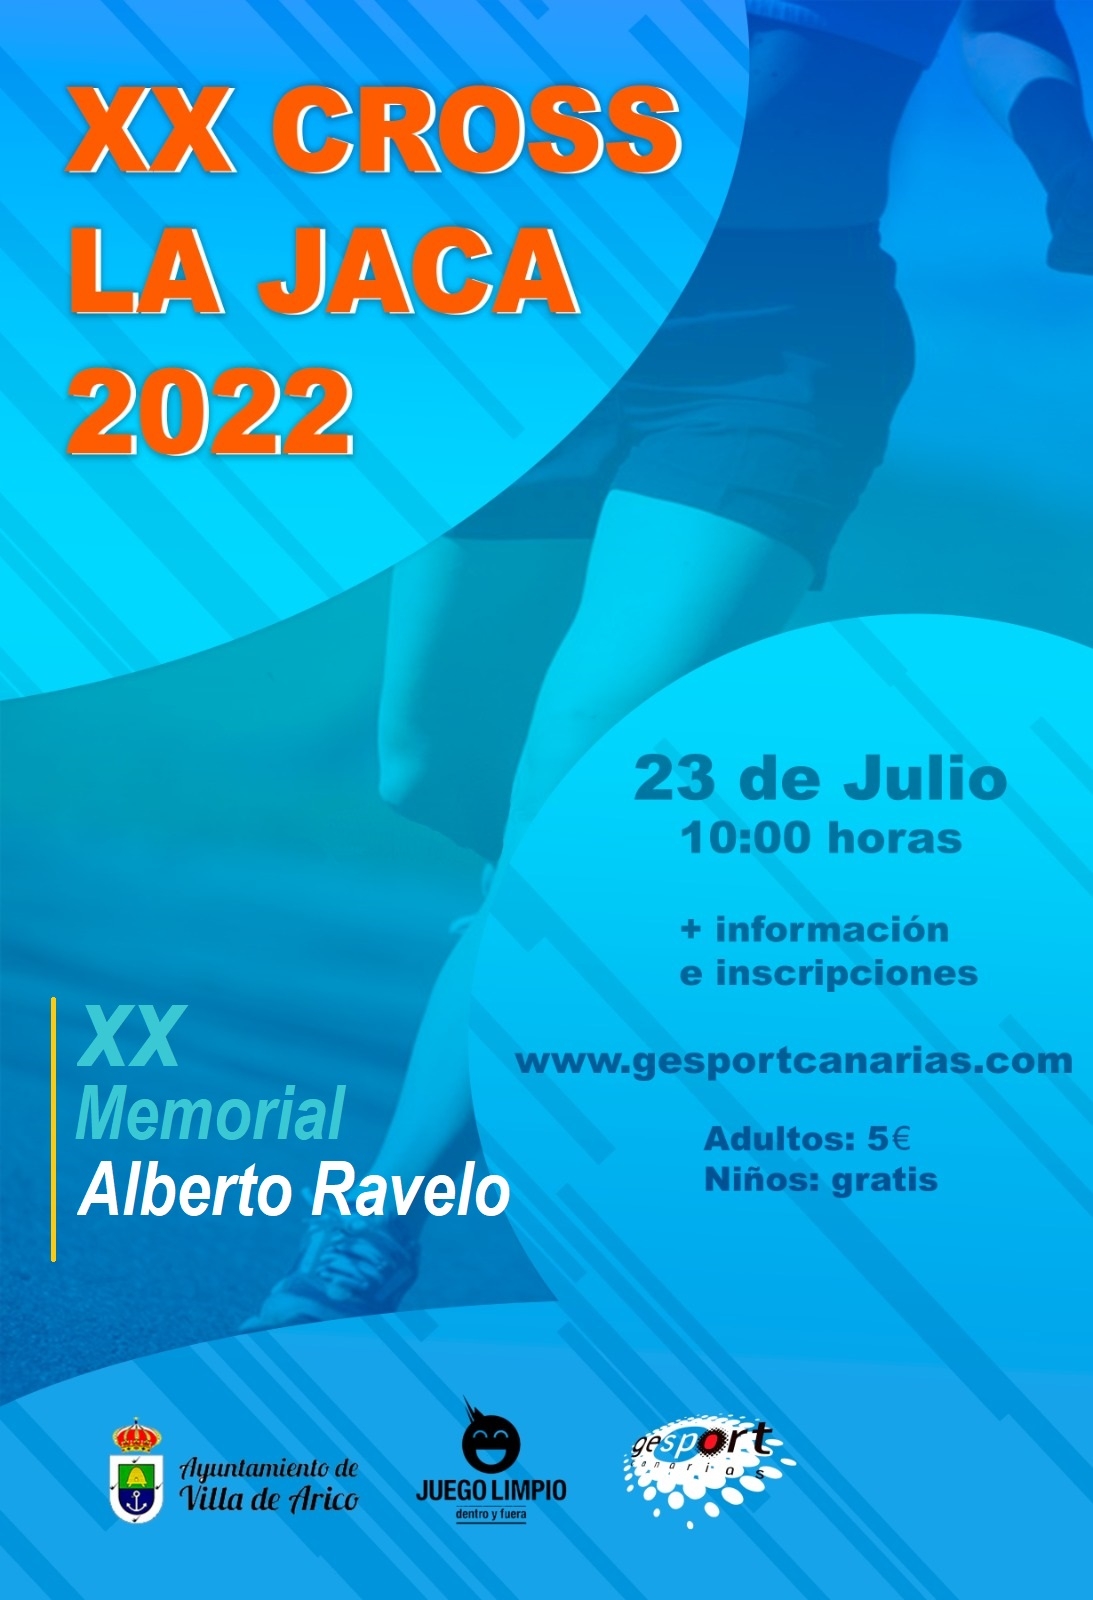 XX CROSS LA JACA 2022 - Inscríbete